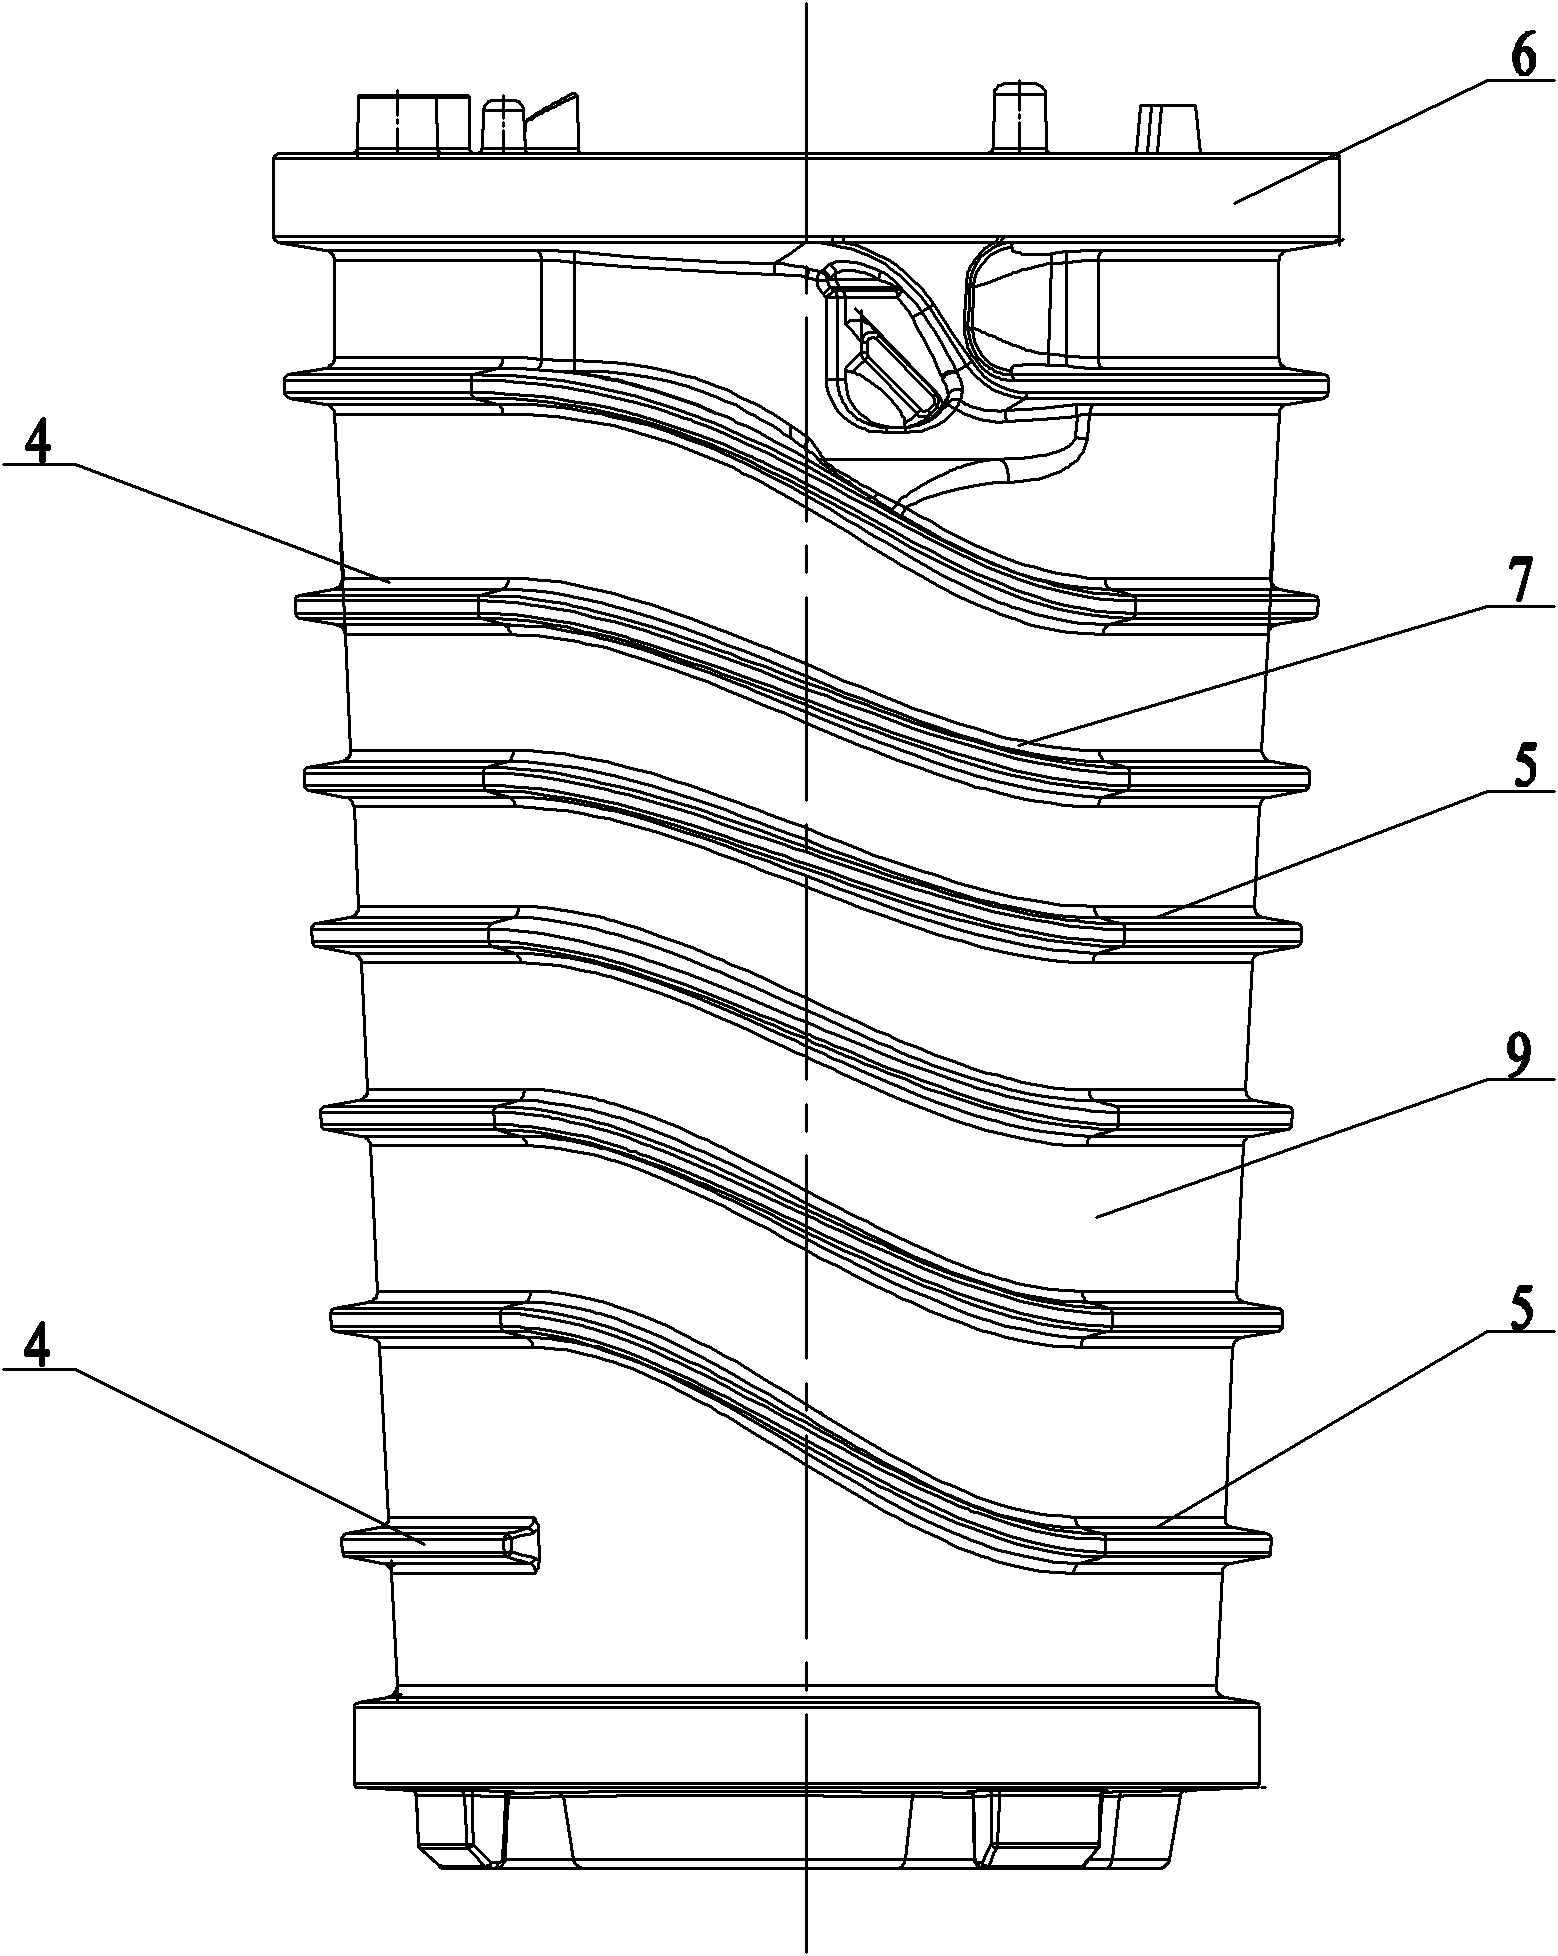 Heat exchanger structure